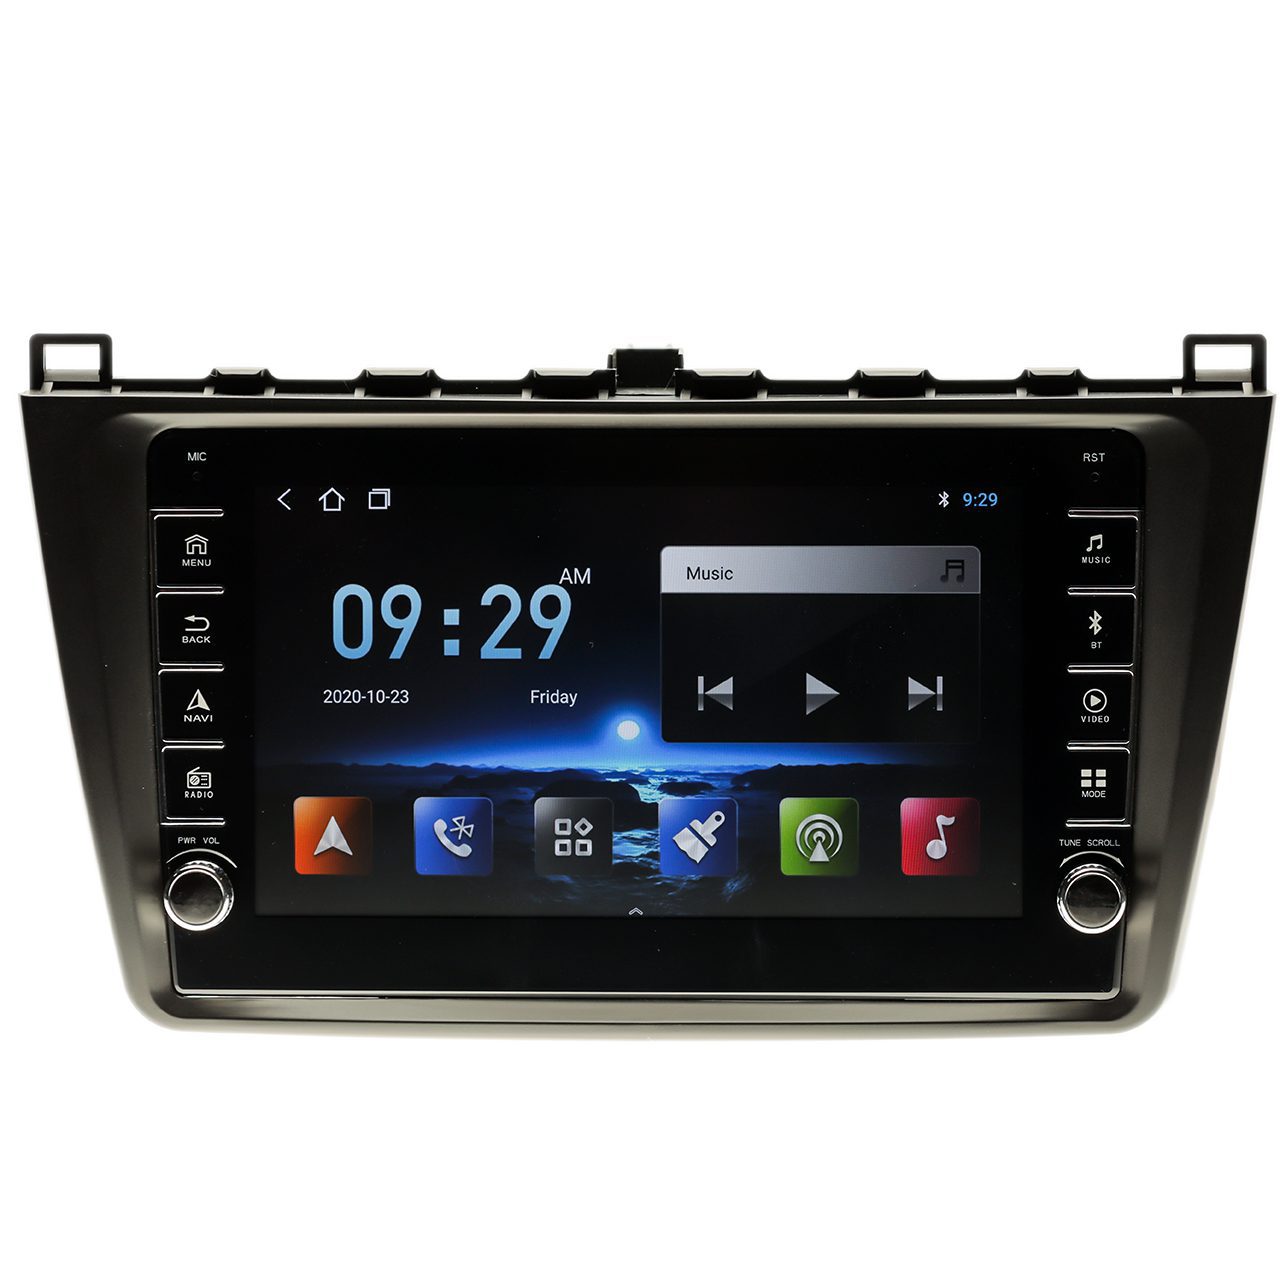 Navigatie AUTONAV PLUS Android GPS Dedicata Mazda 6 GH1/GH2 2007-2012, Model PRO Memorie 16GB Stocare, 1GB DDR3 RAM, Butoane Laterale Si Regulator Volum, Display 8